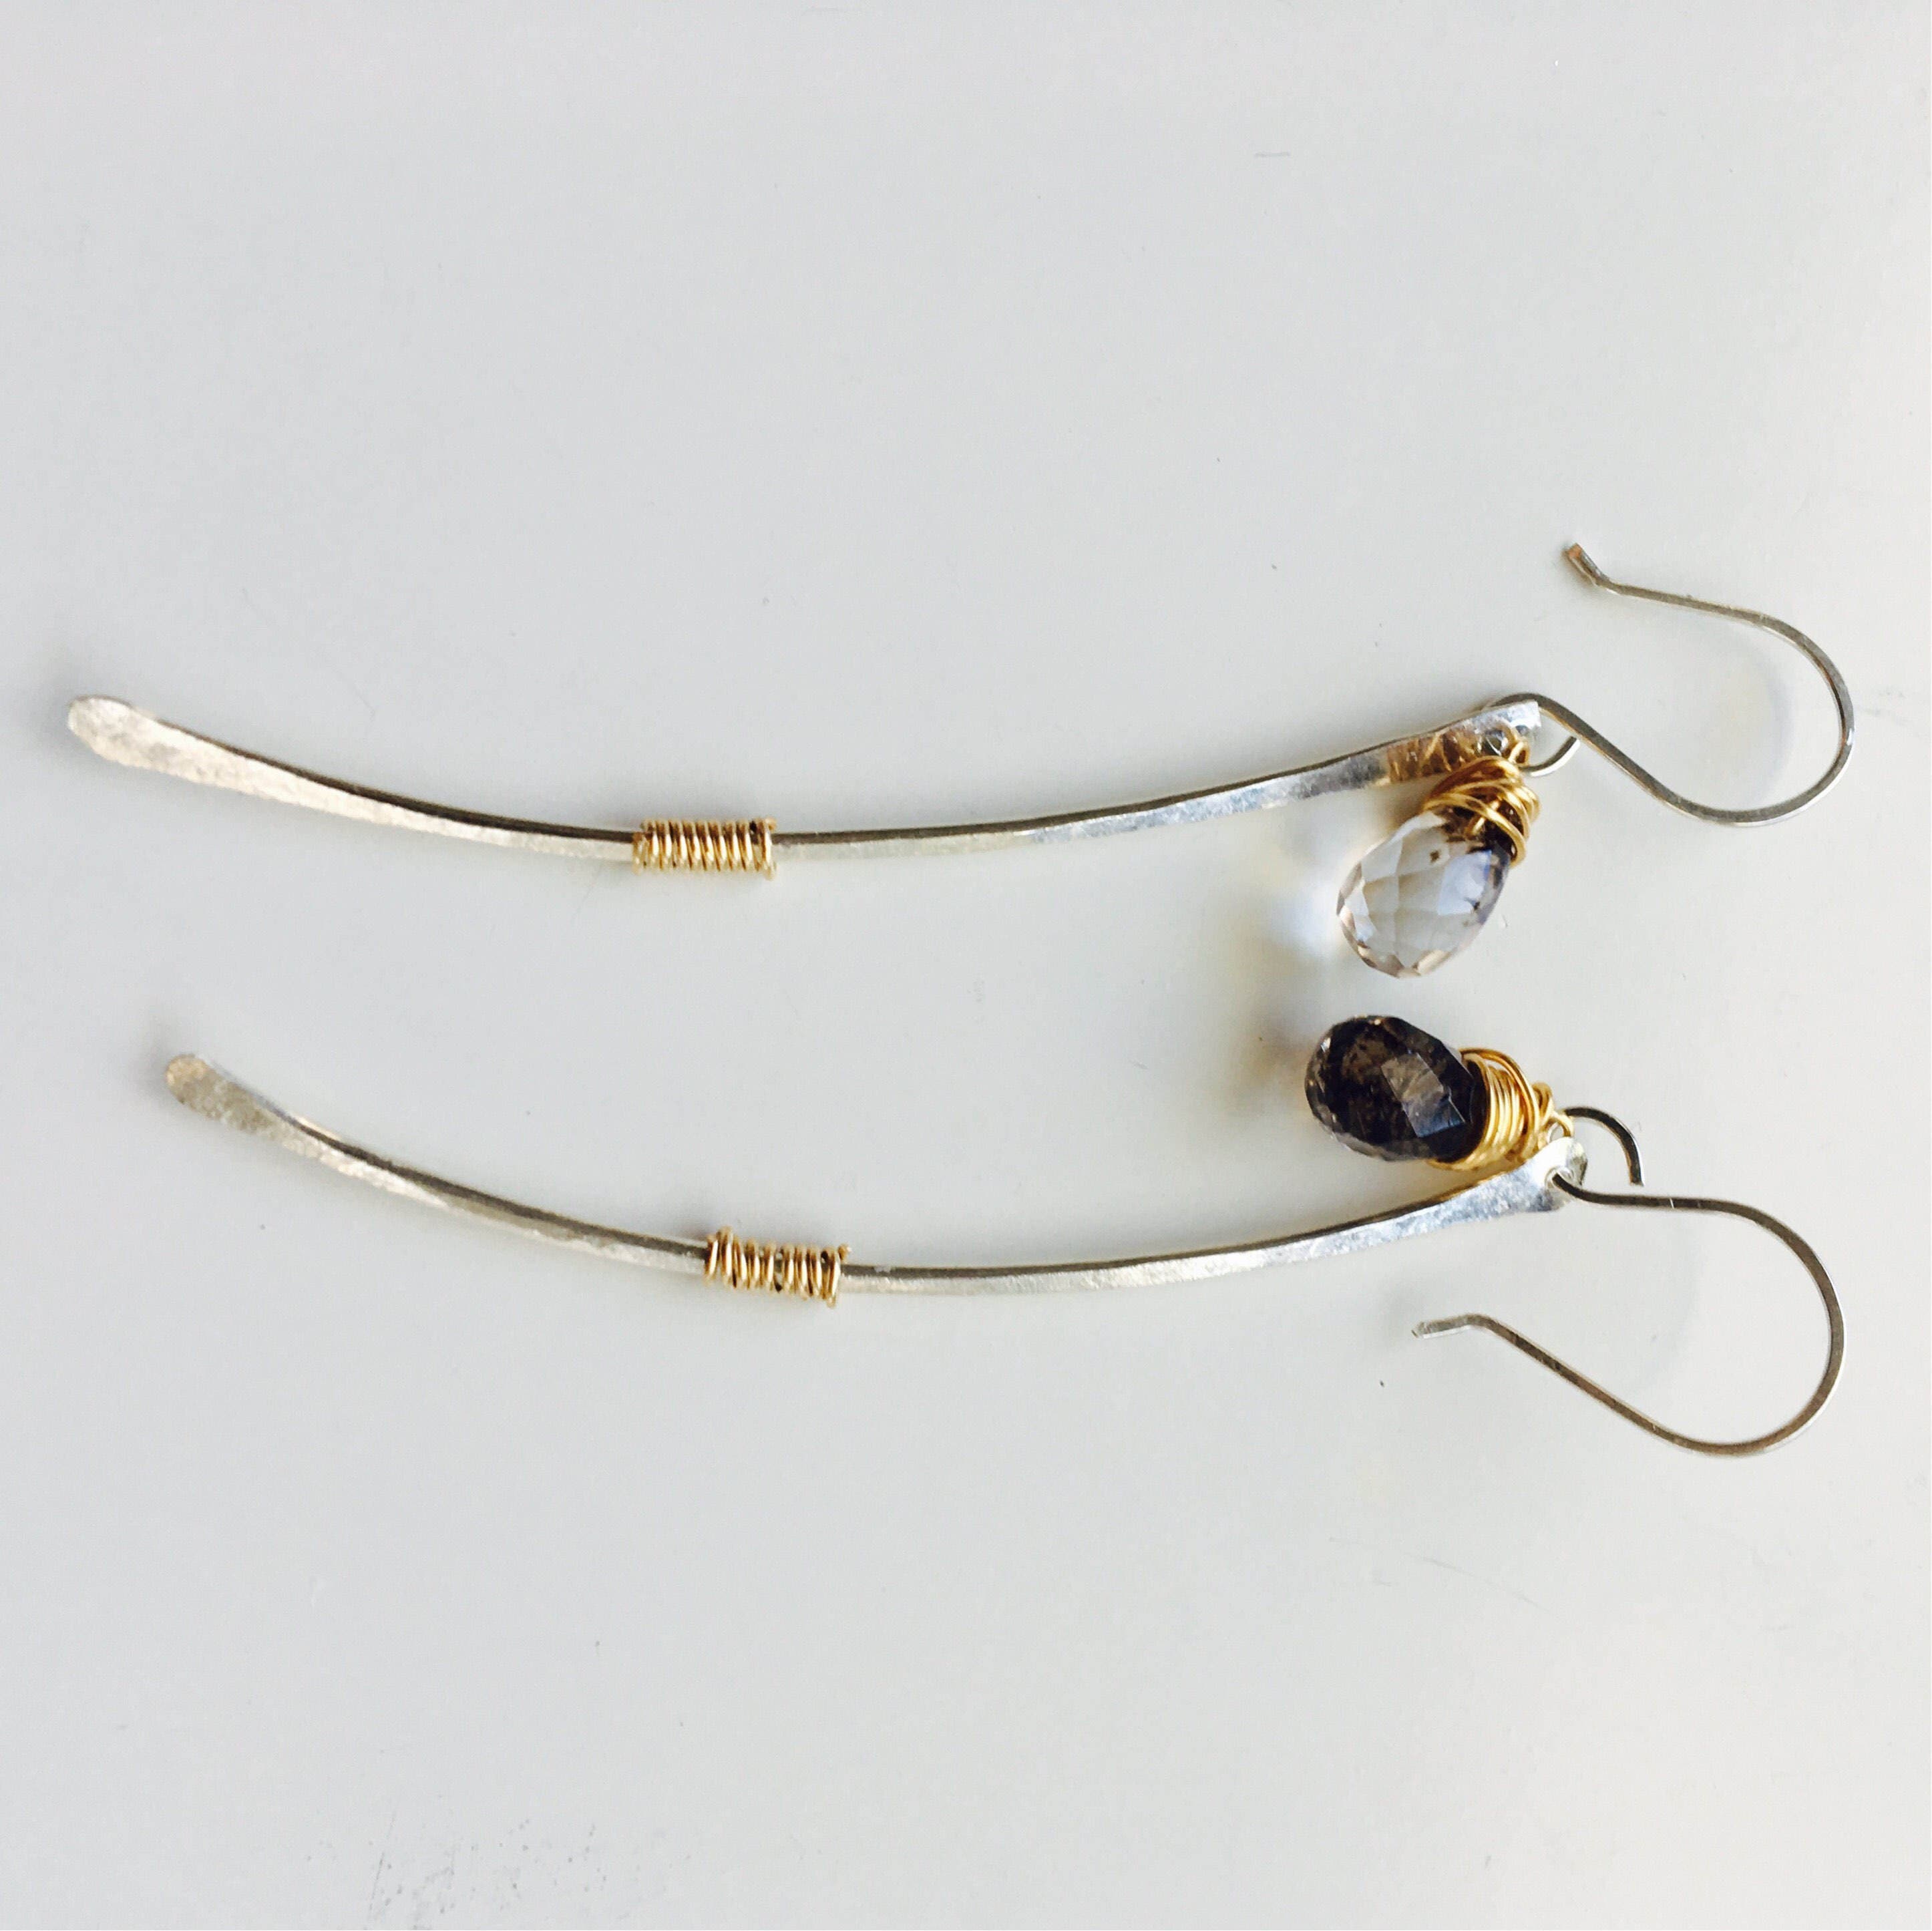 The Babs earrings// Stering Silver earrings Rutilated Quartz earrings// Curved Stick Earrings// stick earrings// mixed metal jewelry//